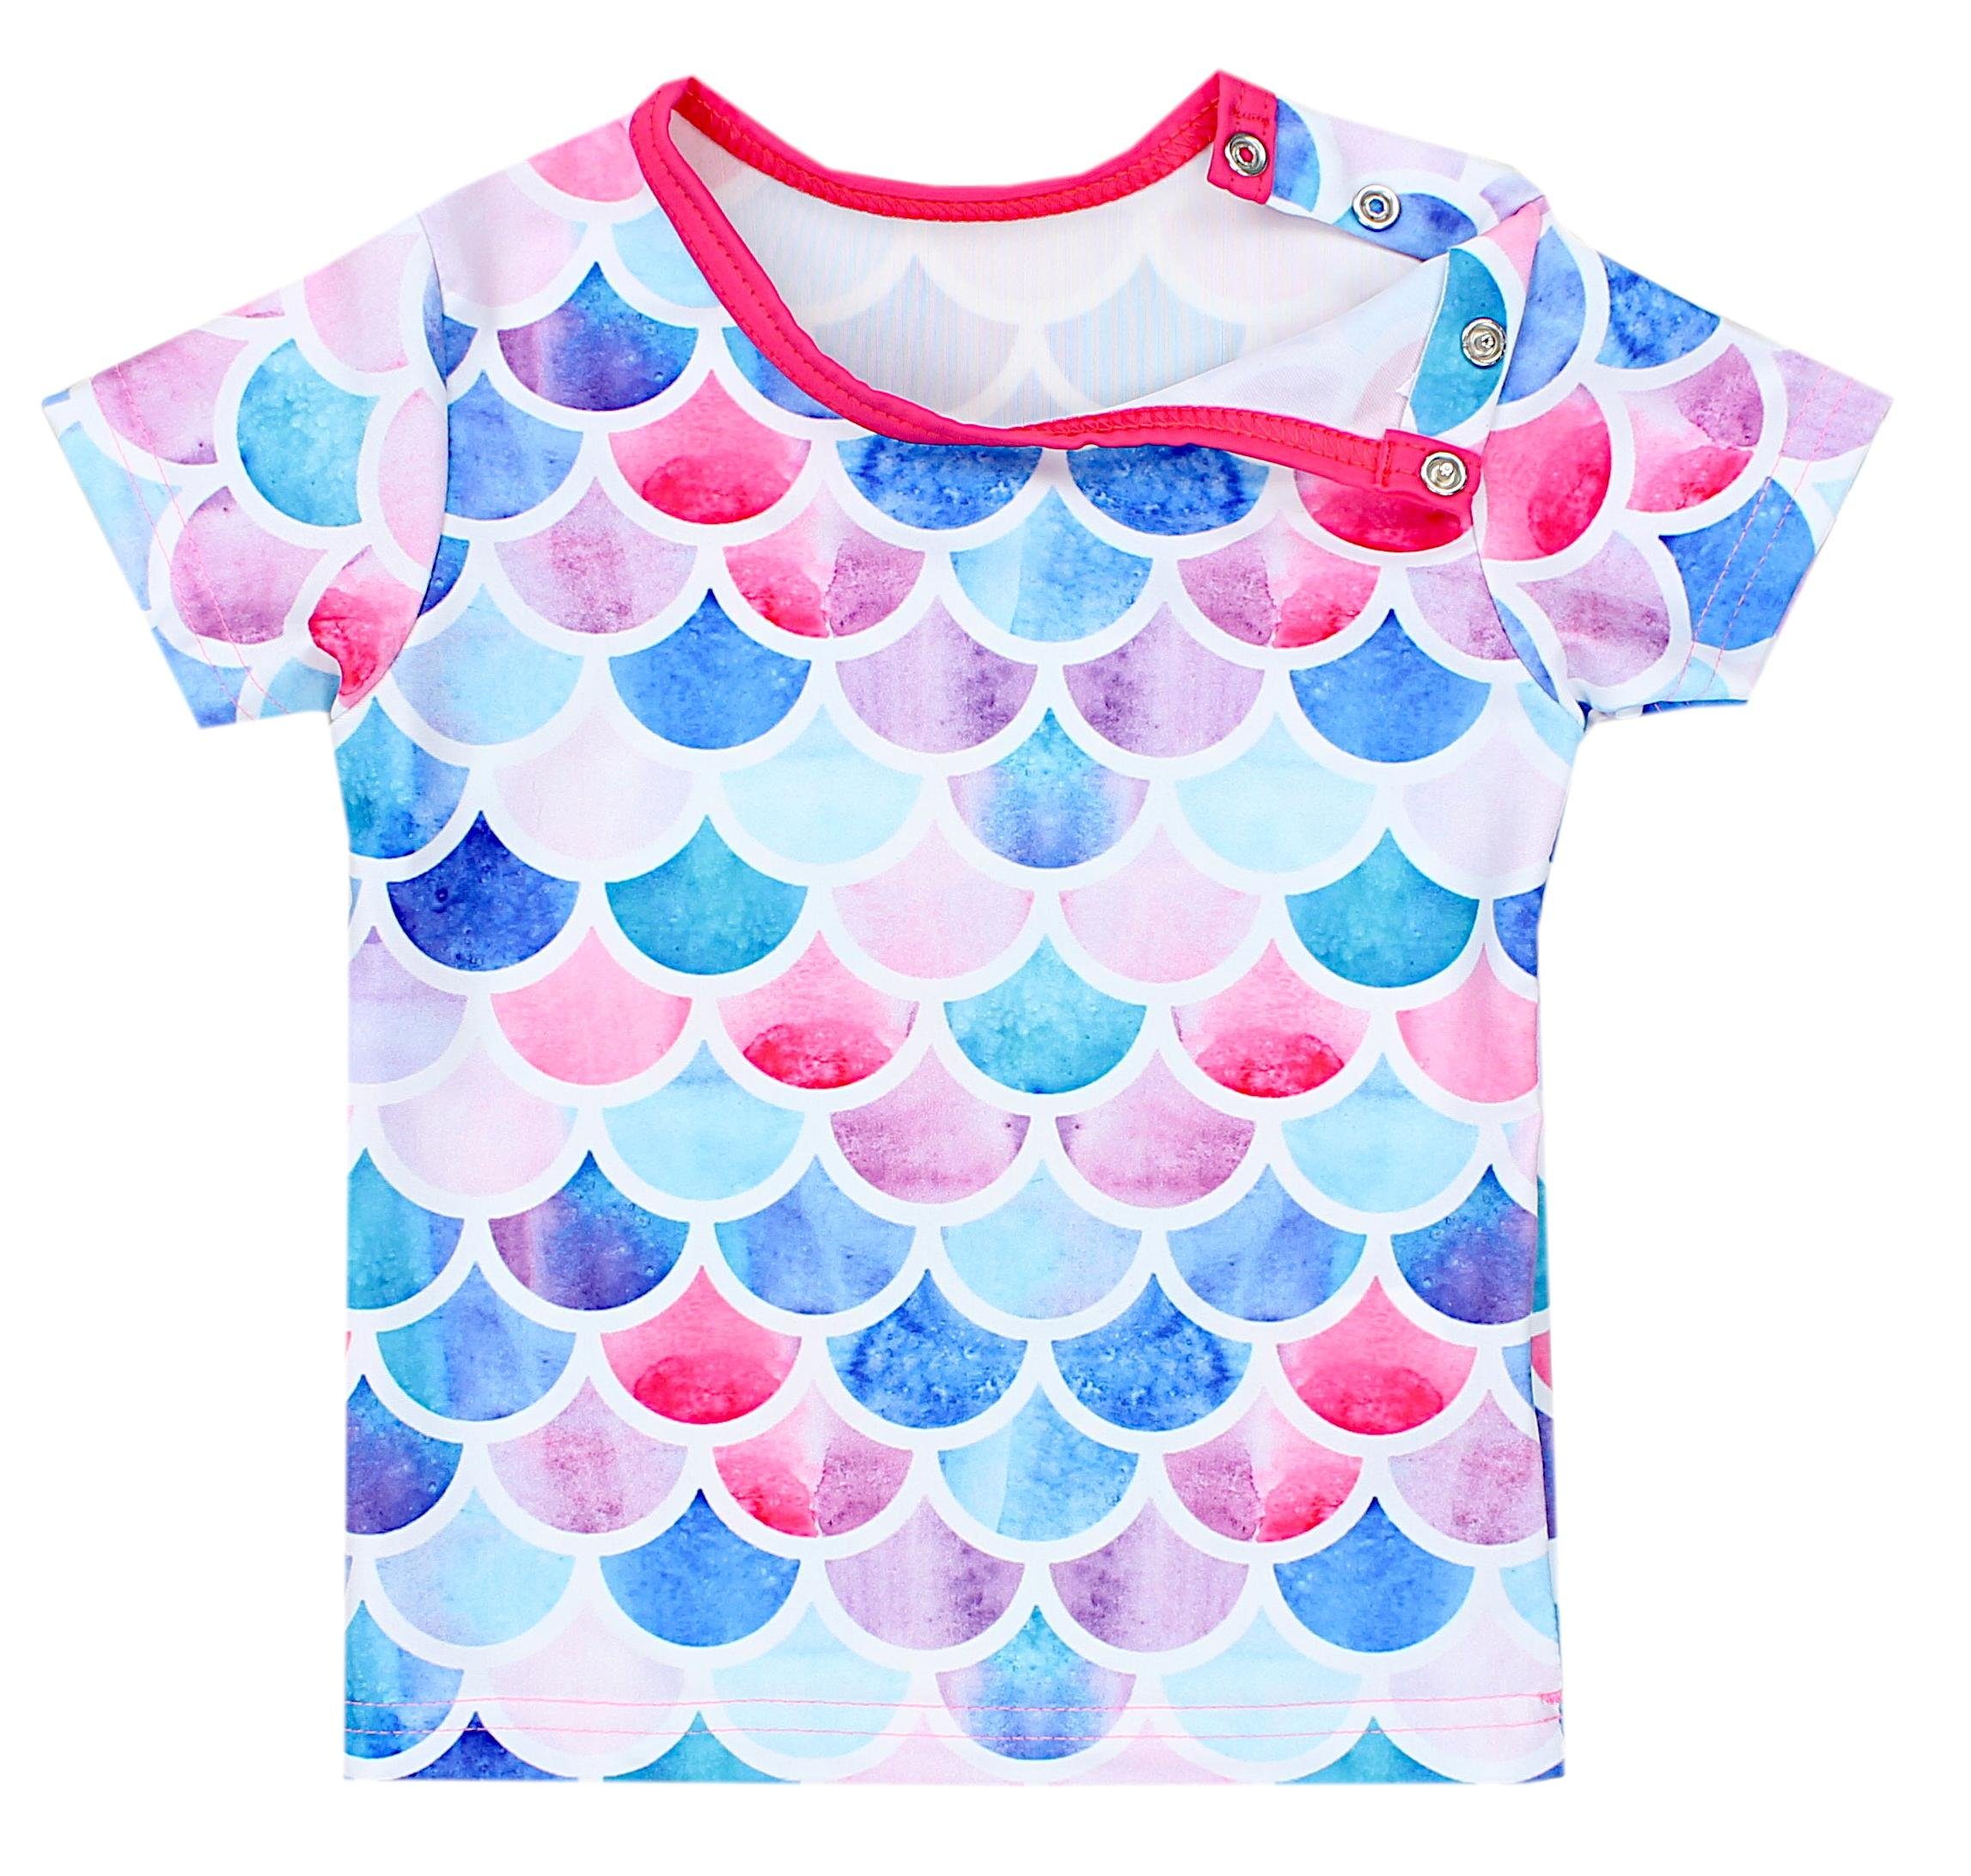 Zweiteiler Himbeerrot Aquarti Baby Meerjungfrau Badeanzug / Shirt Badeanzug UV-Schutz Rosa Kinder Badehose Set Mädchen